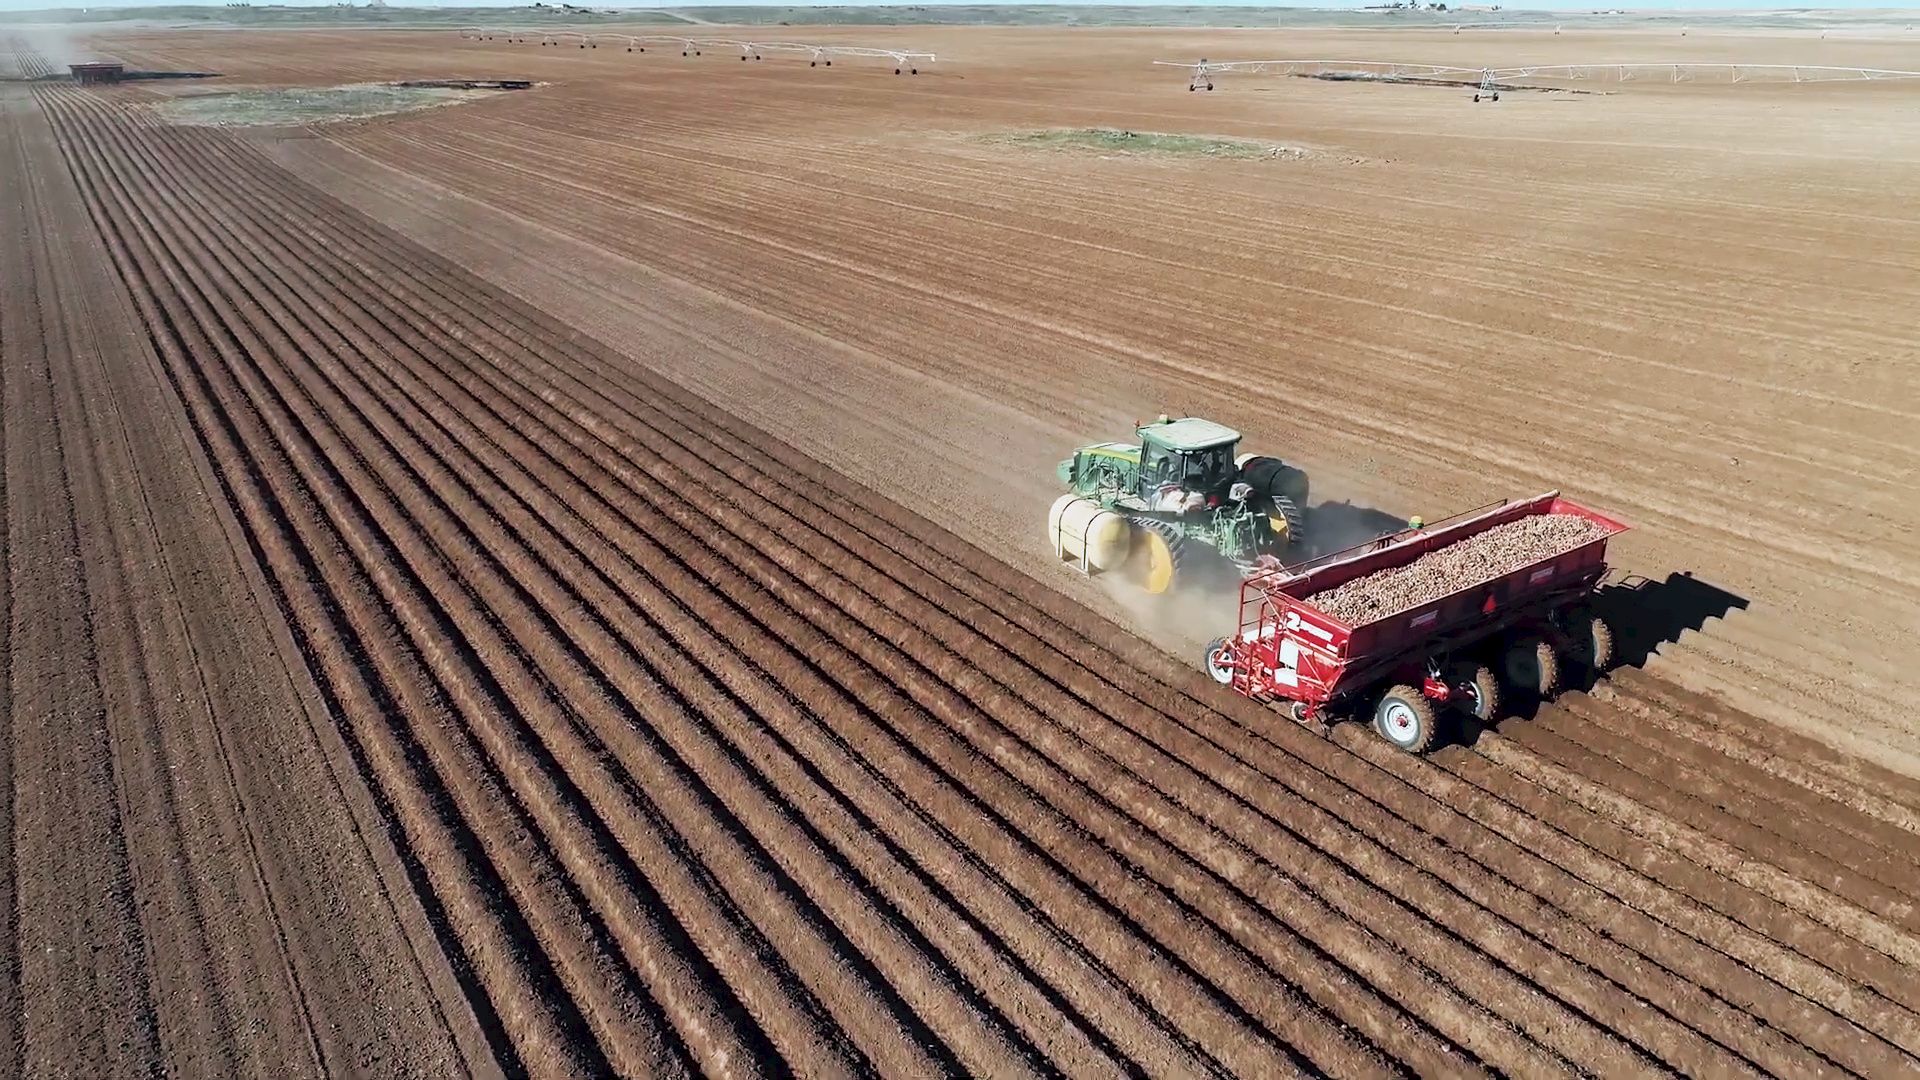 A tractor seeding potatoes.